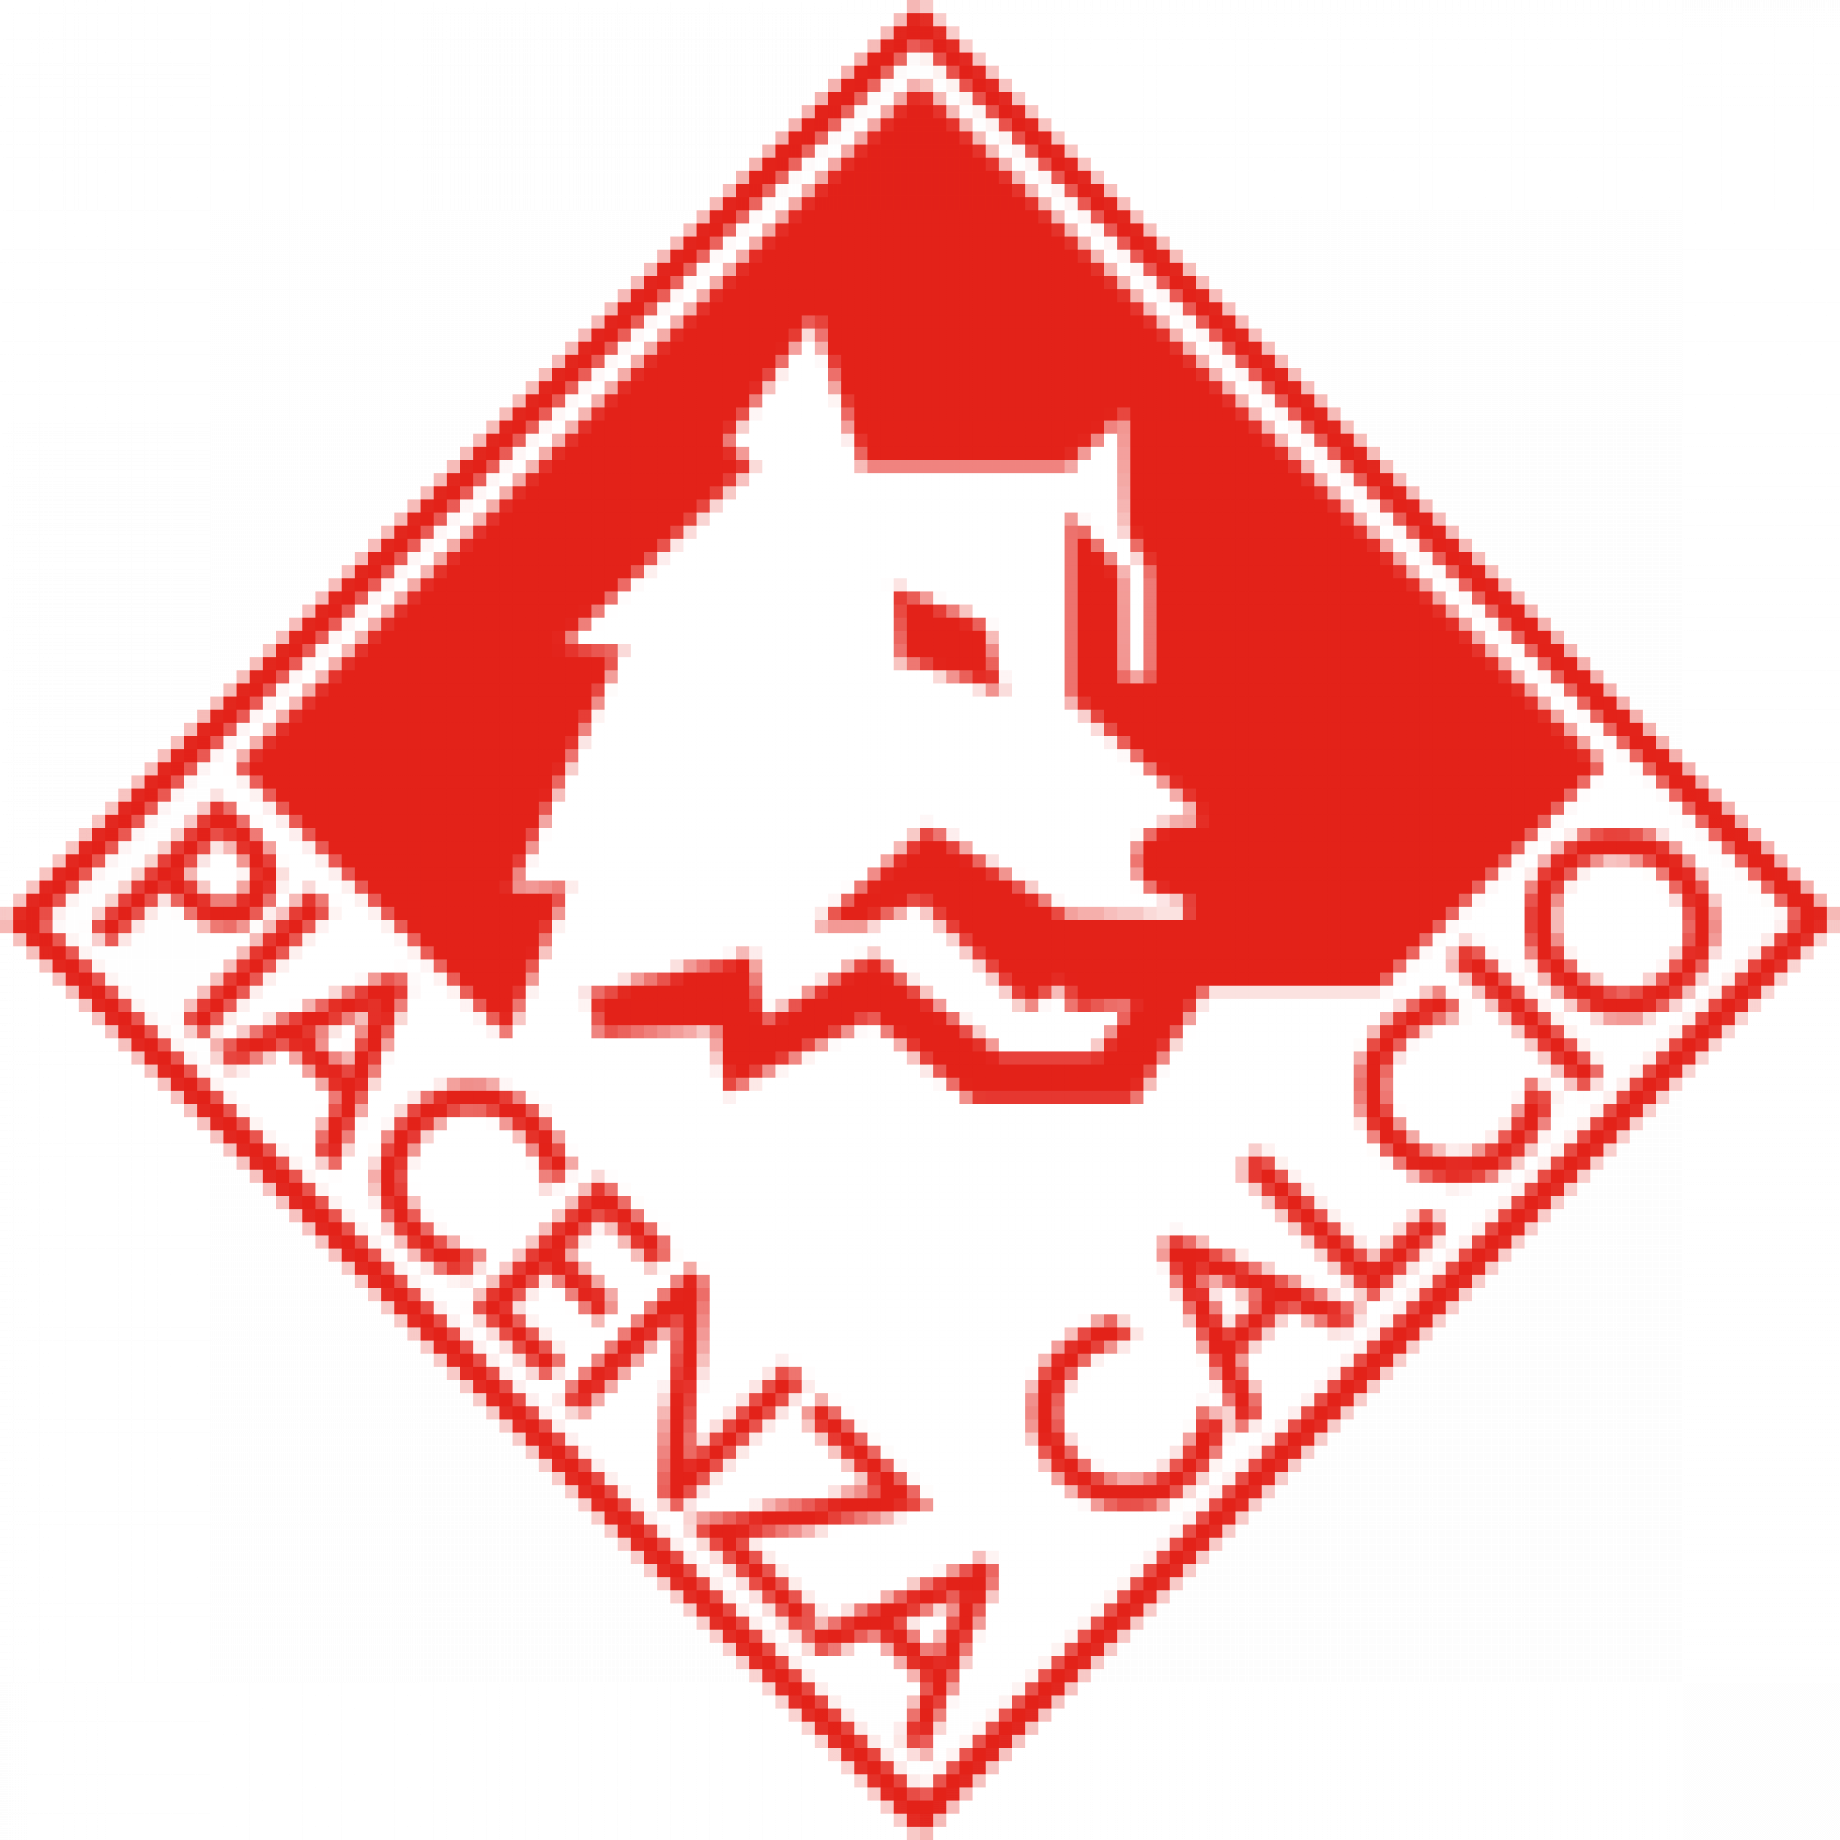 Piacenza_Calcio_stemma.svg.png